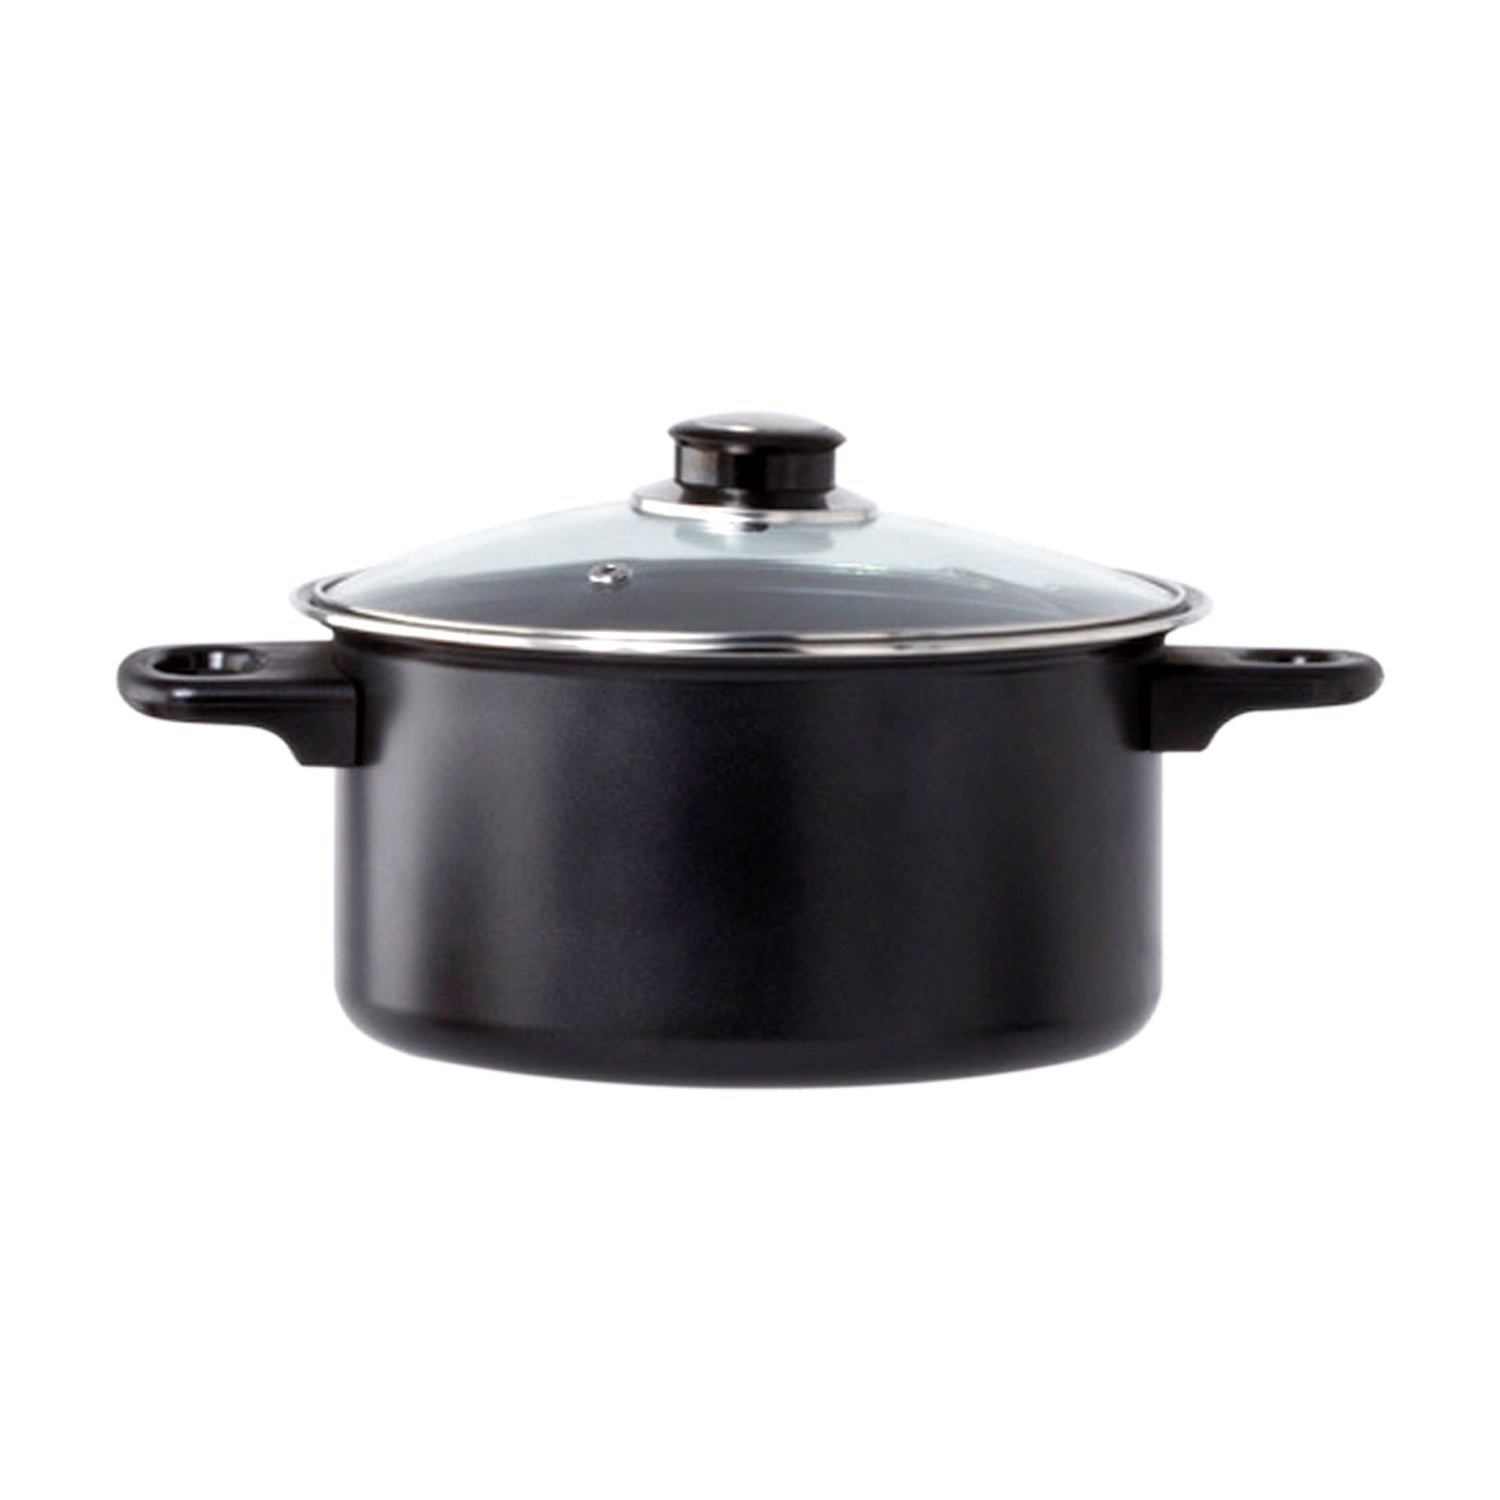 8 Pc Carbon Steel Non Stick Cookware Set W/Utensils Dutch Oven Fry Sauce Pan - Carbon Steel Cookware Set - Carbon Steel Pans & Pots with Utensils (Black)